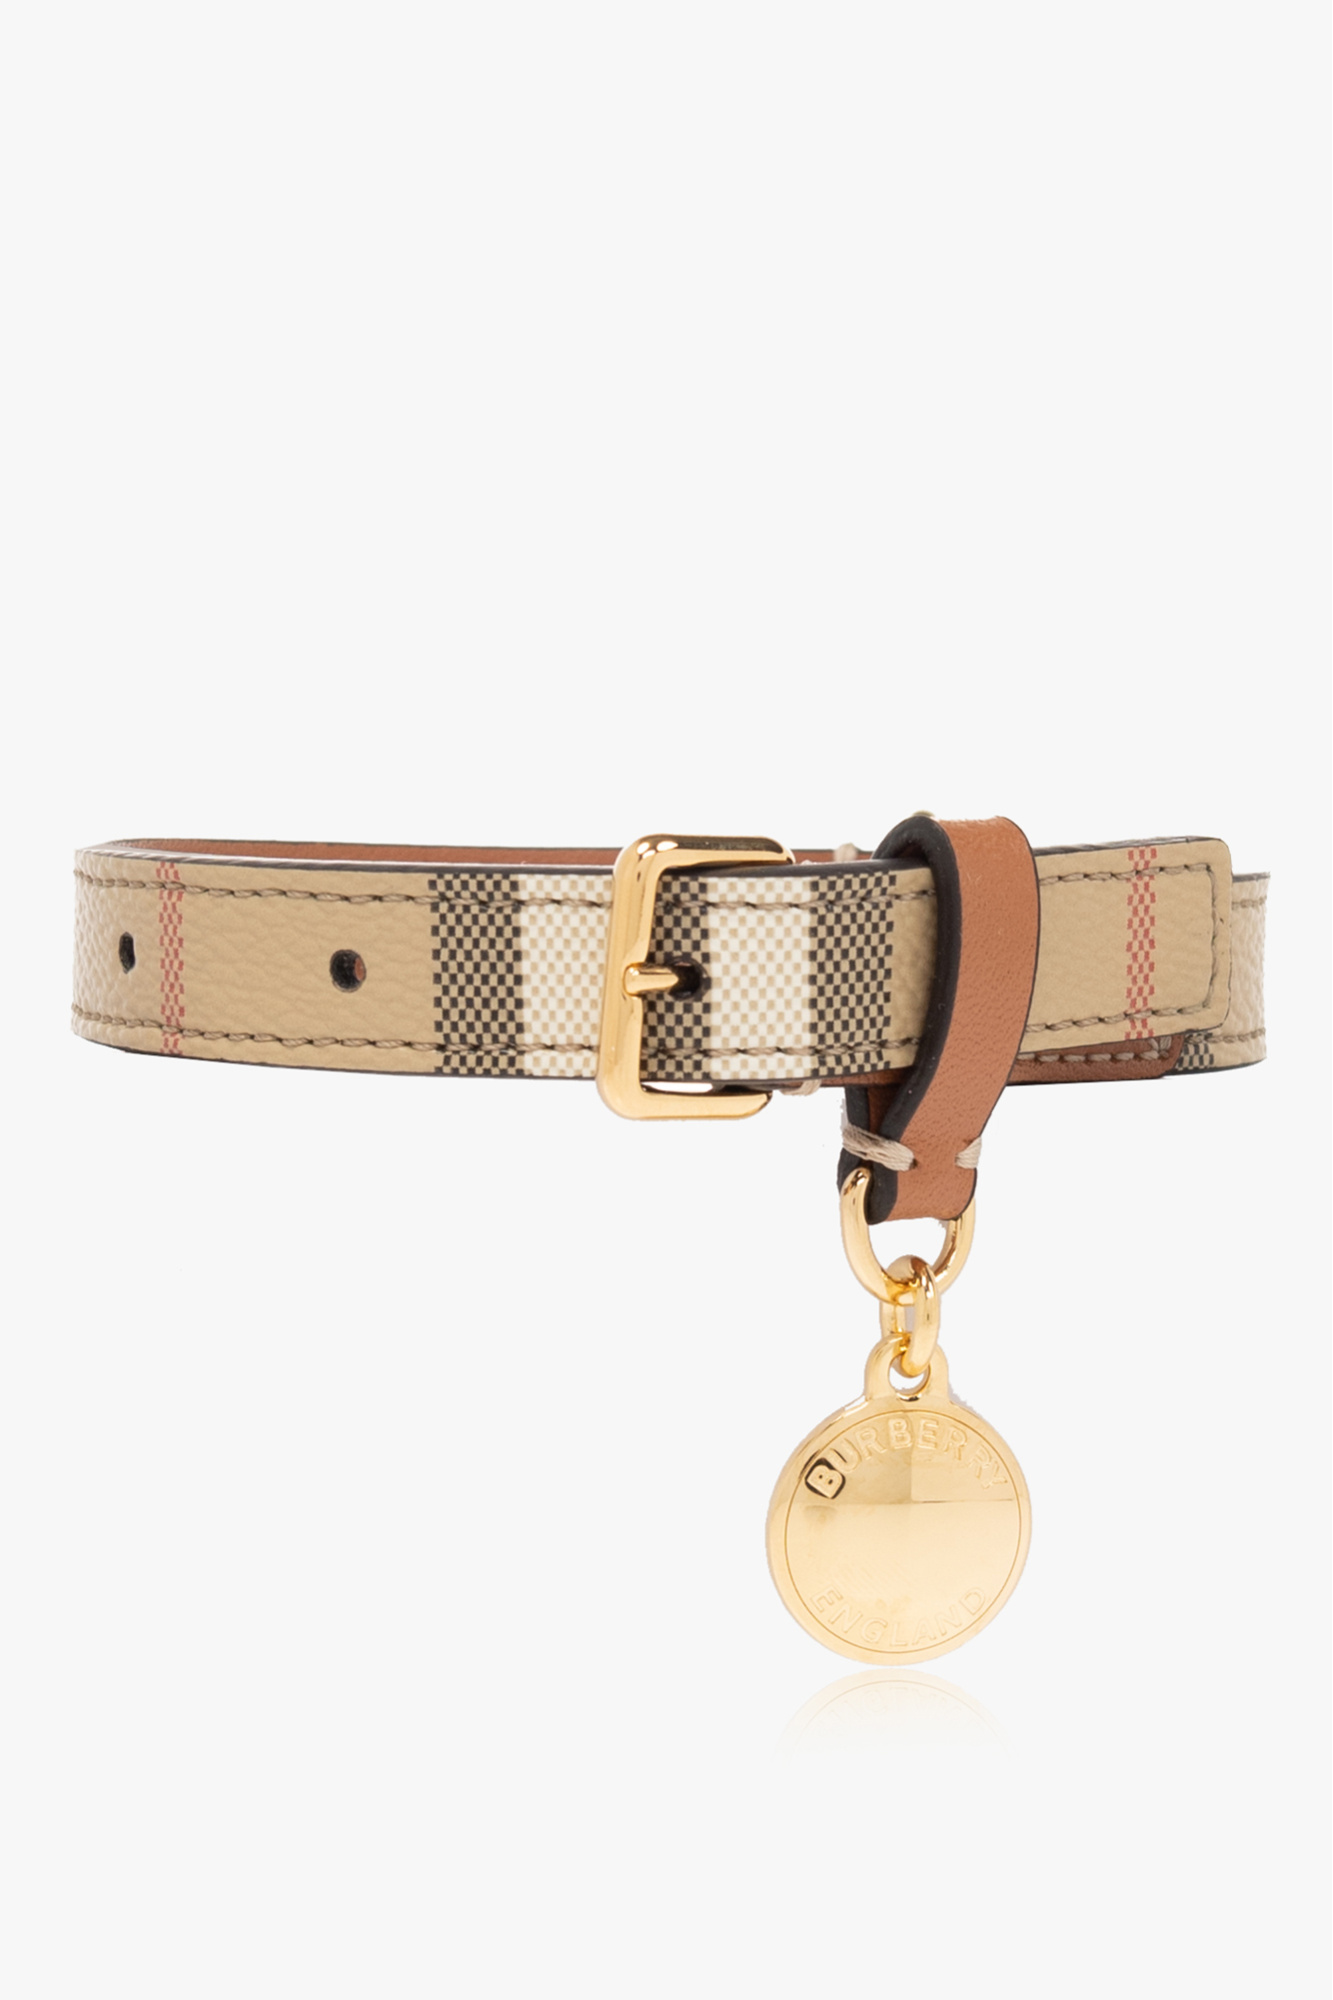 Burberry Check Printed Dog Collar - Vcheck,brown